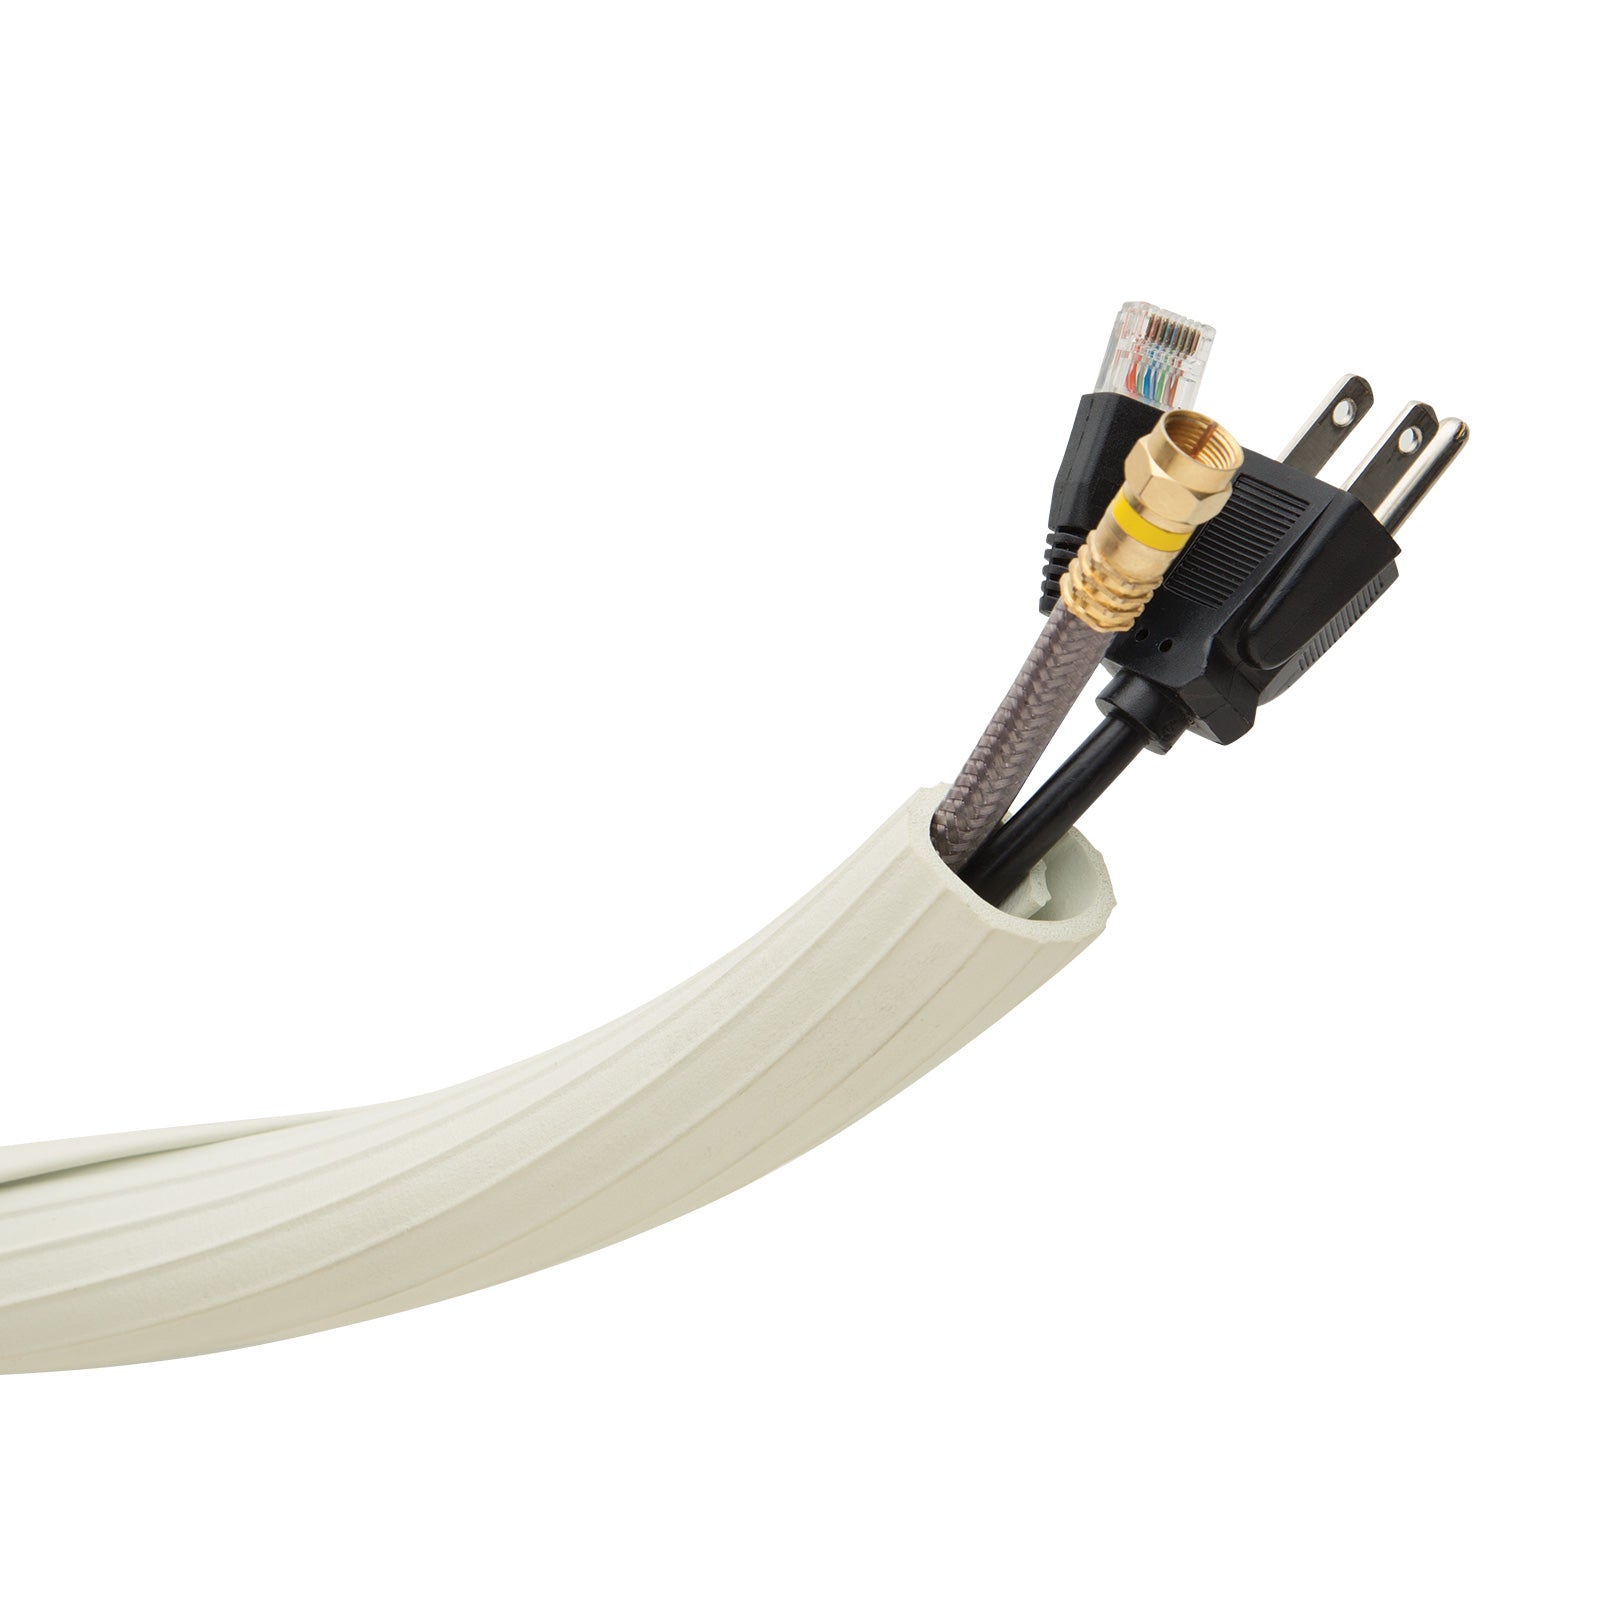 Ut Wire 8Inc Flexi Cable Wrap UTWFCW8 - HighPoint Online Shop